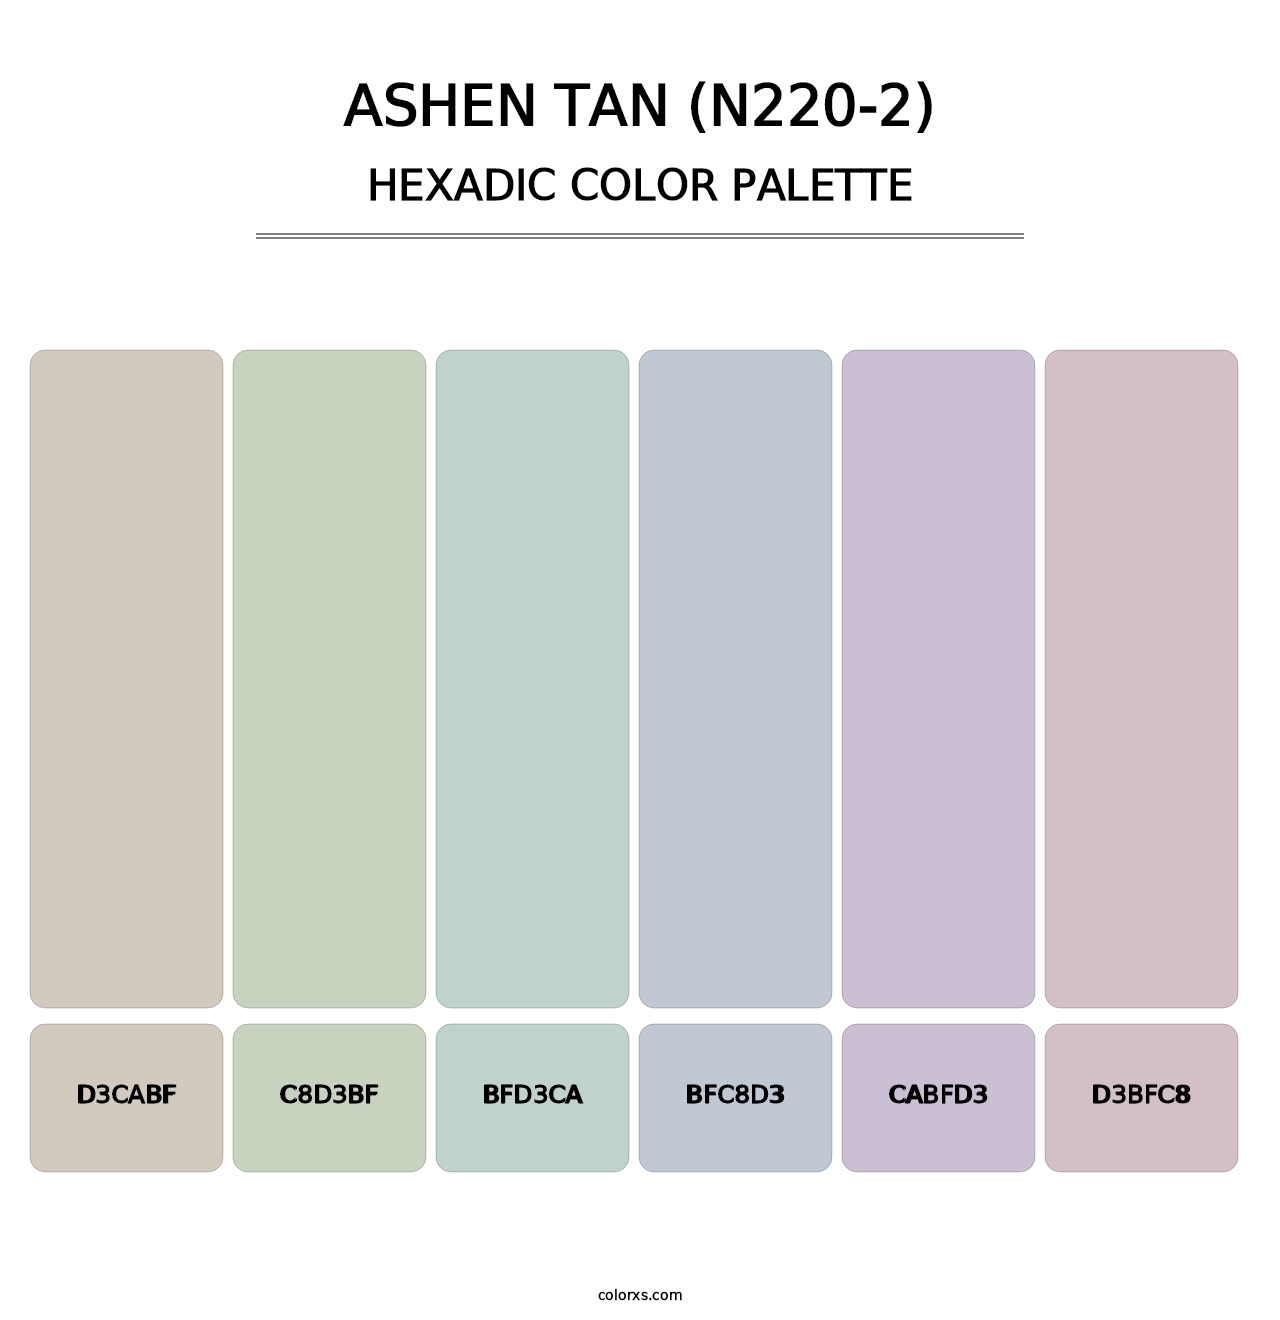 Ashen Tan (N220-2) - Hexadic Color Palette